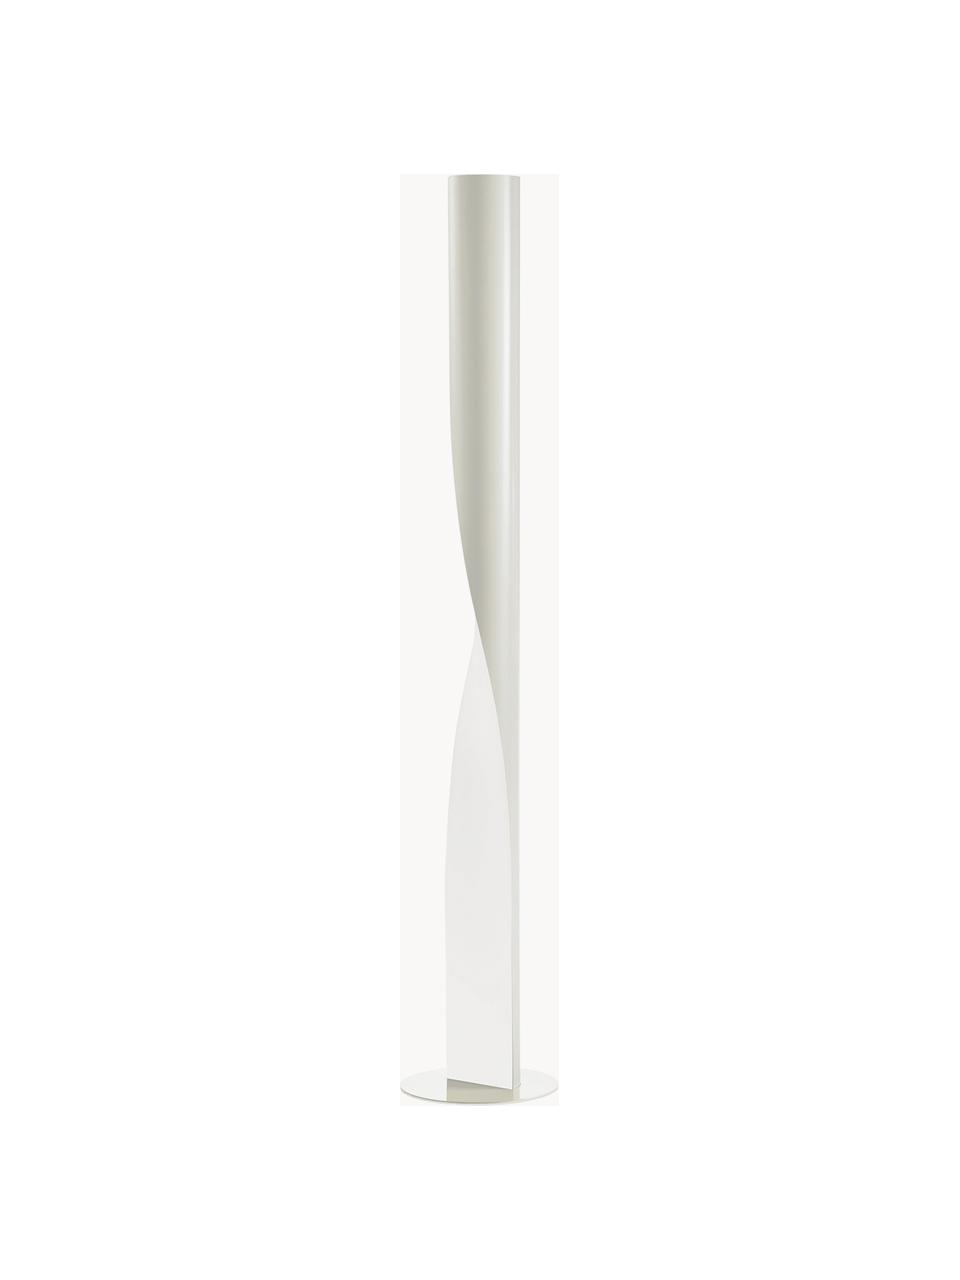 Grote vloerlamp Evita, dimbaar, Diffuser: stof, Gebroken wit, H 190 cm